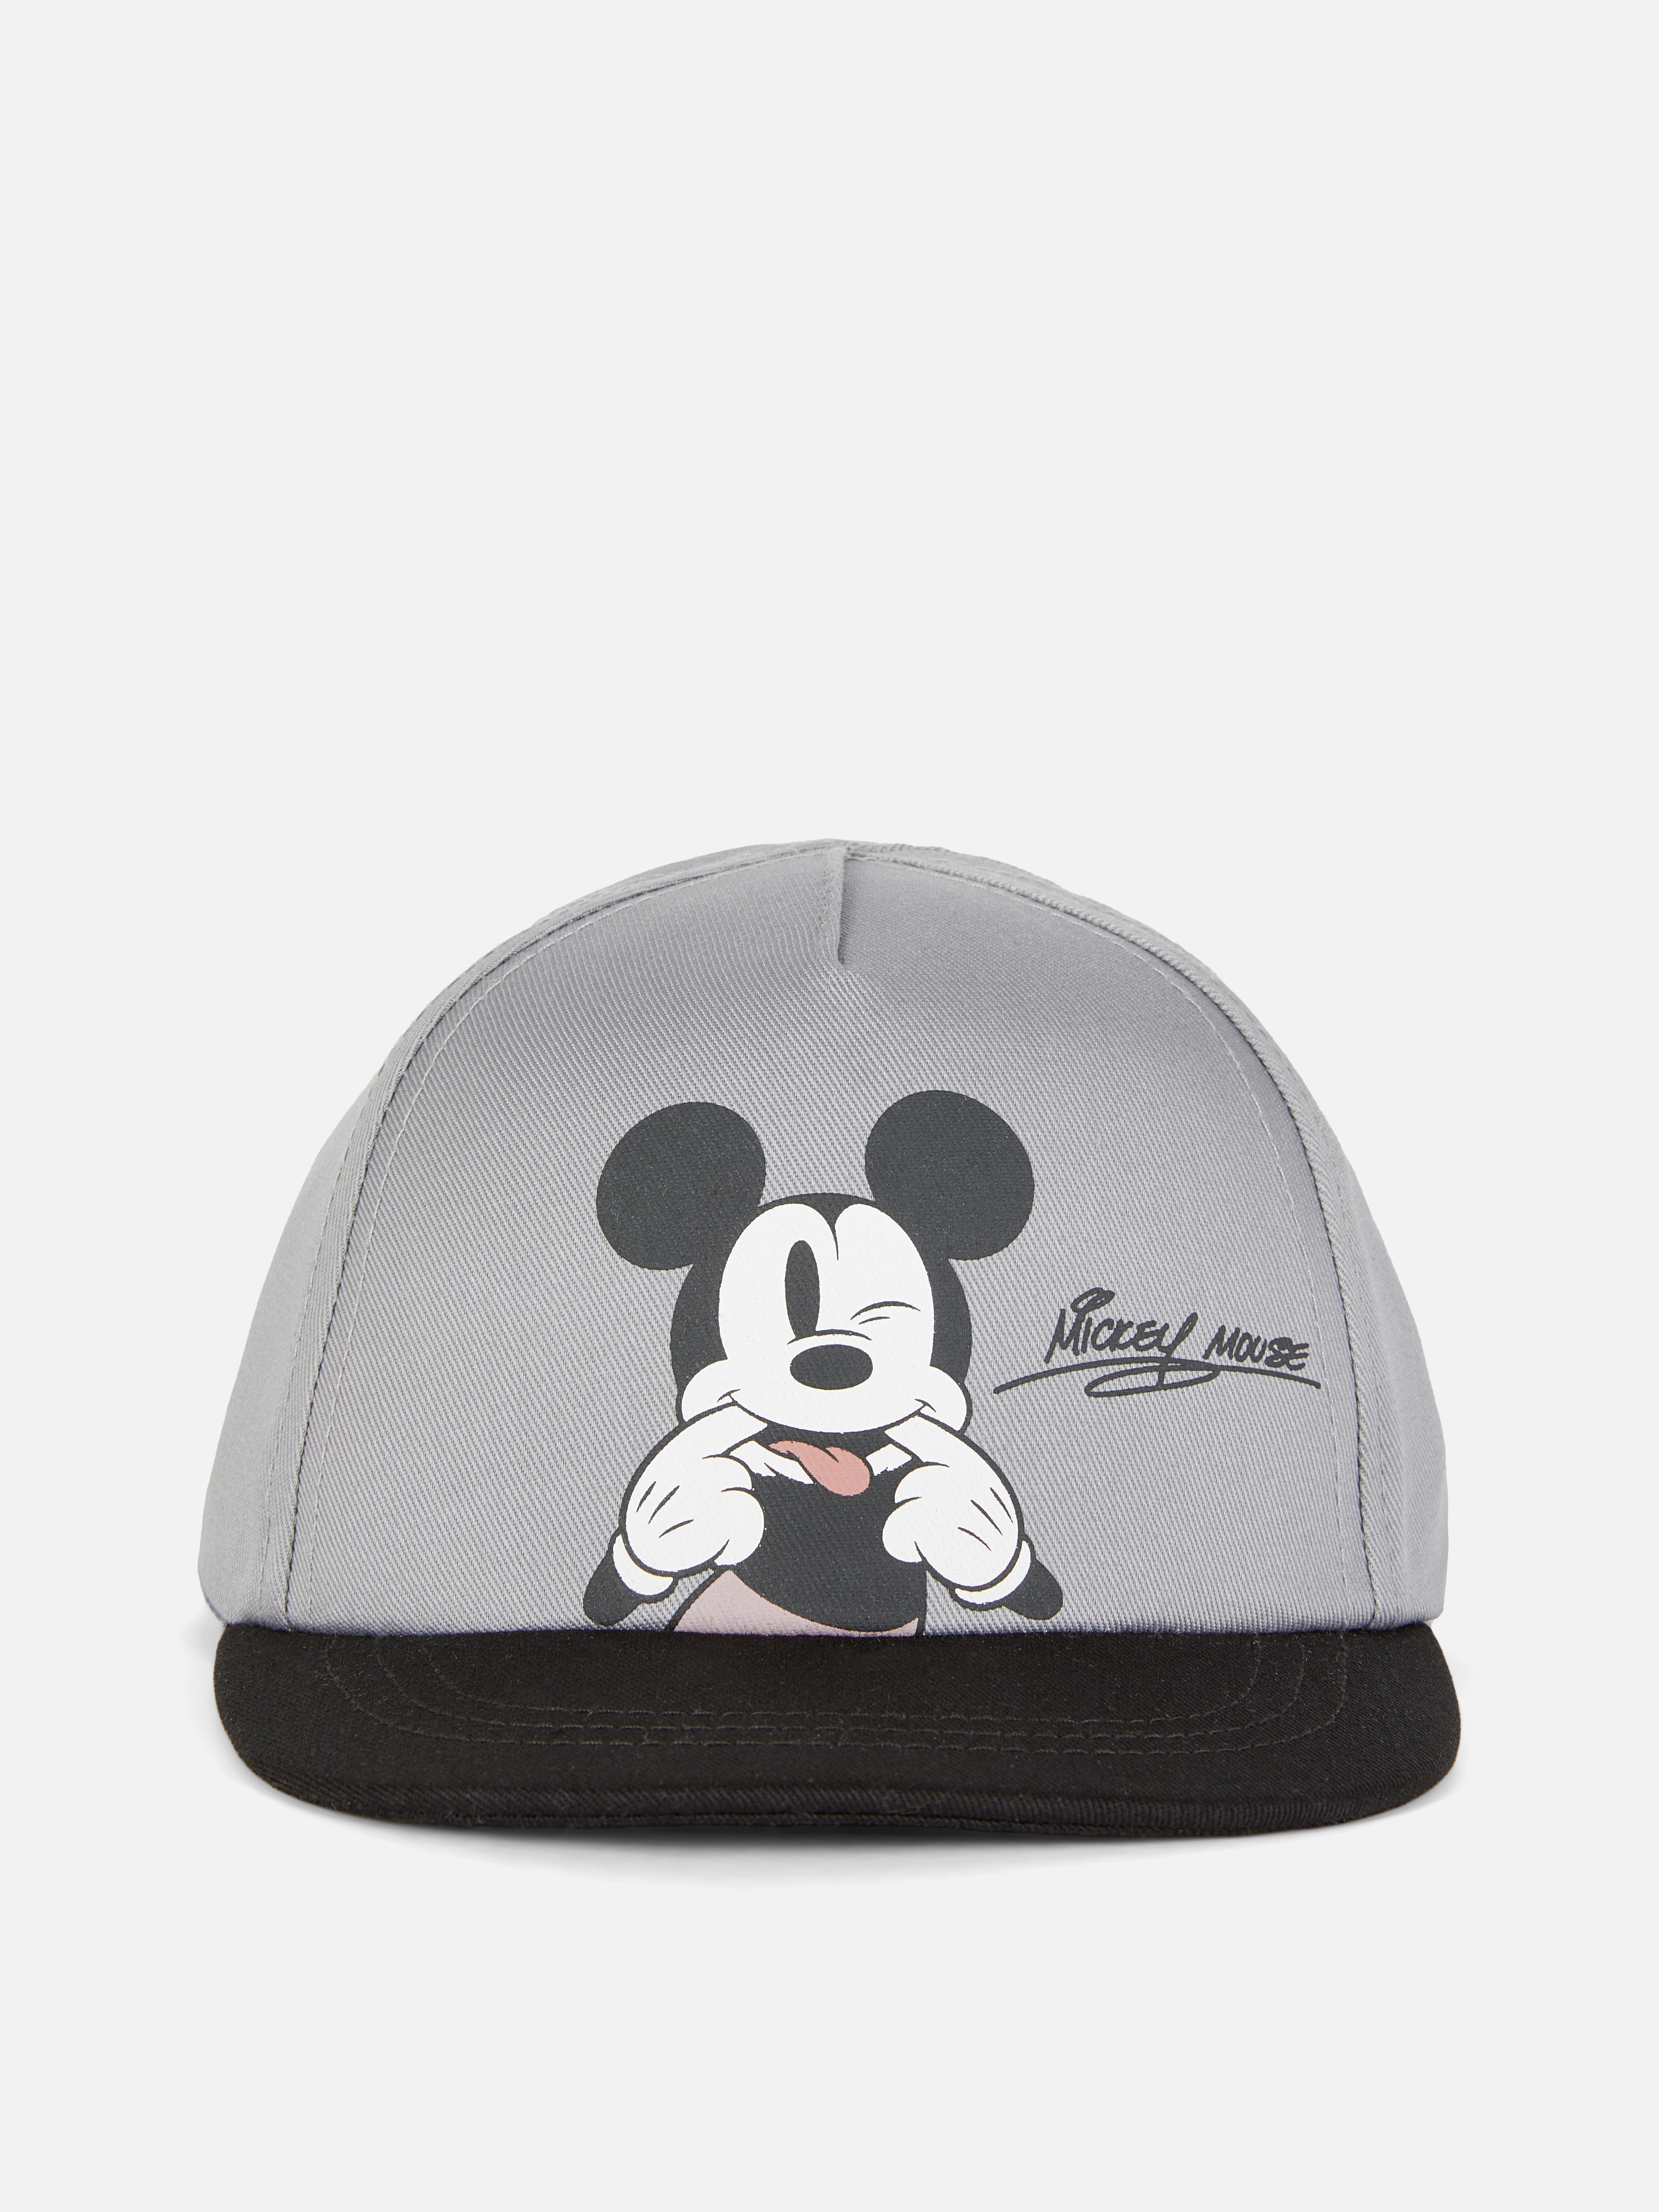 Disney’s Mickey Mouse Baseball Cap